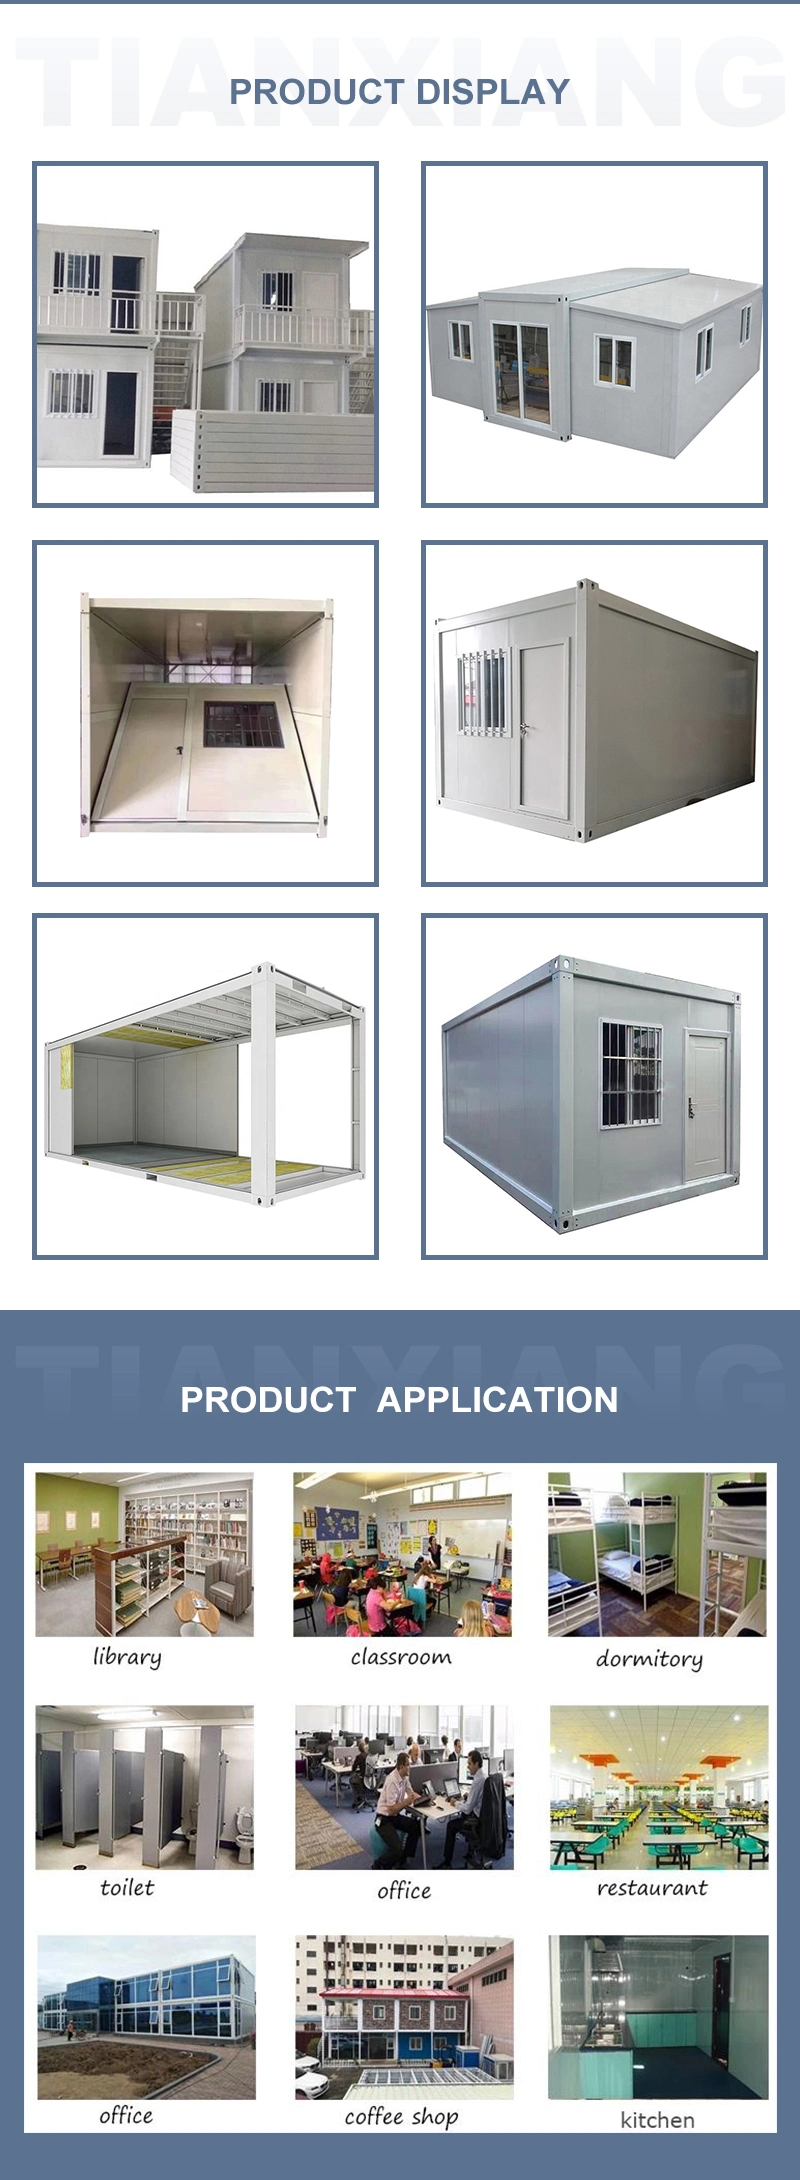 New Portable 20FT Prefab Expandable Foldable Container House (Bathroom, kitchen) Prefab House